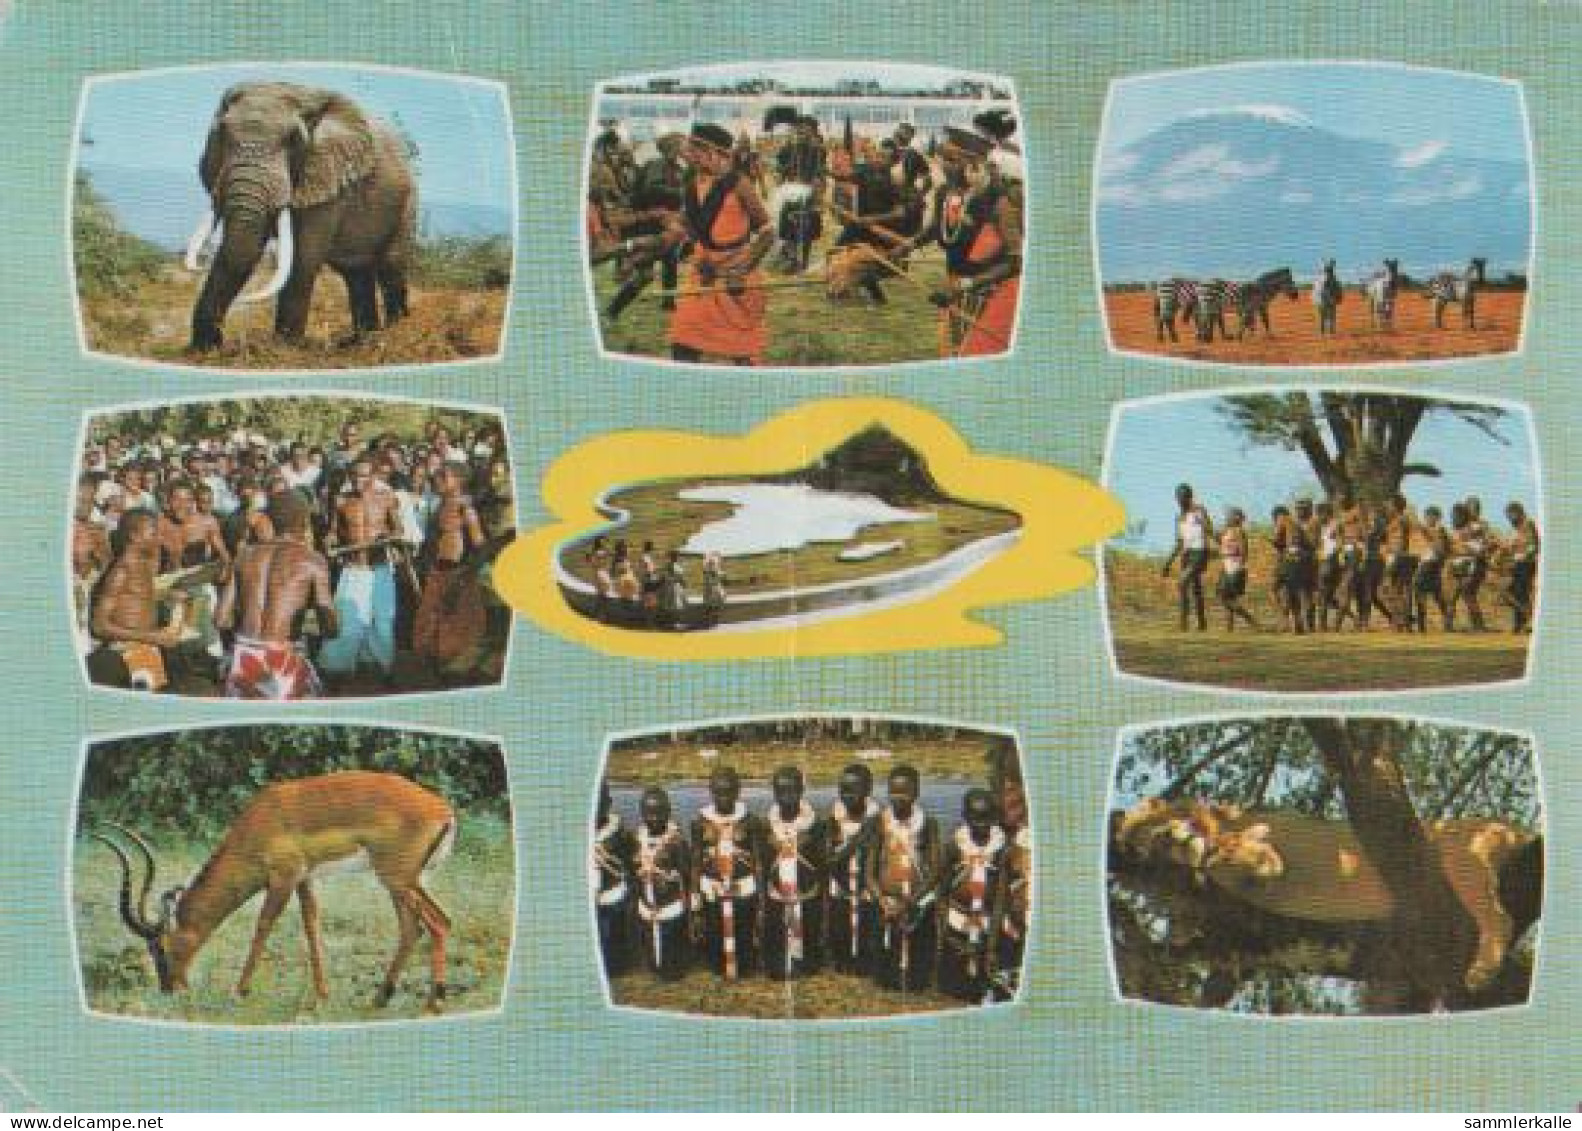 12136 - Kenia - East Africa Game And Tribes - 1988 - Kenya